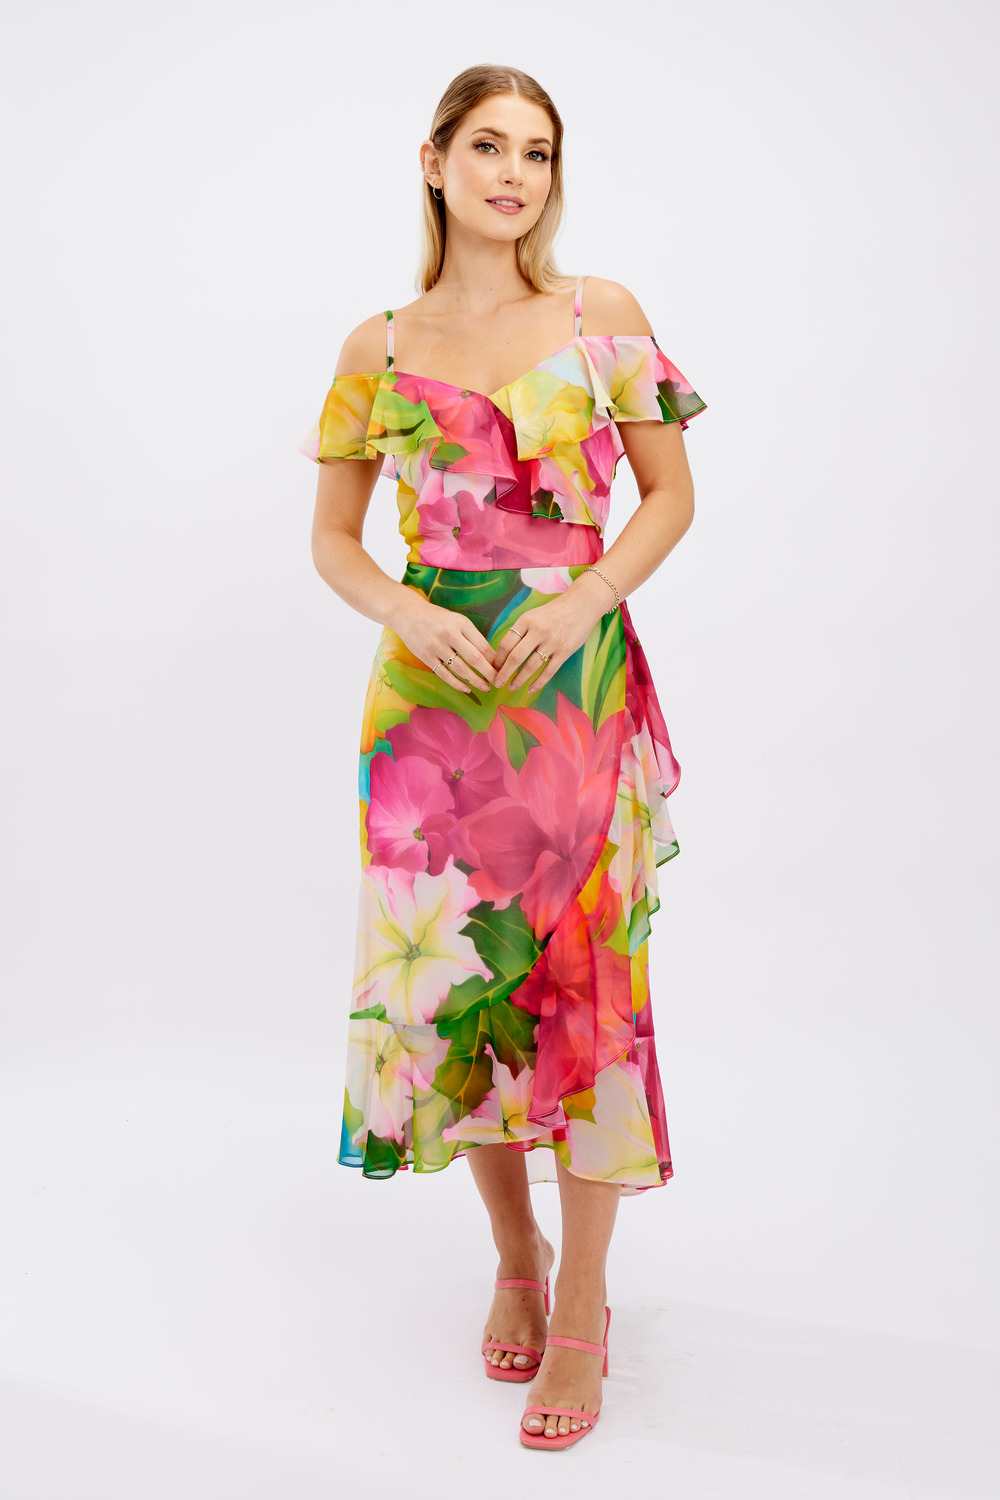 Hibiscus Print Ruffle Dress Style 246484. Fuchsia/green